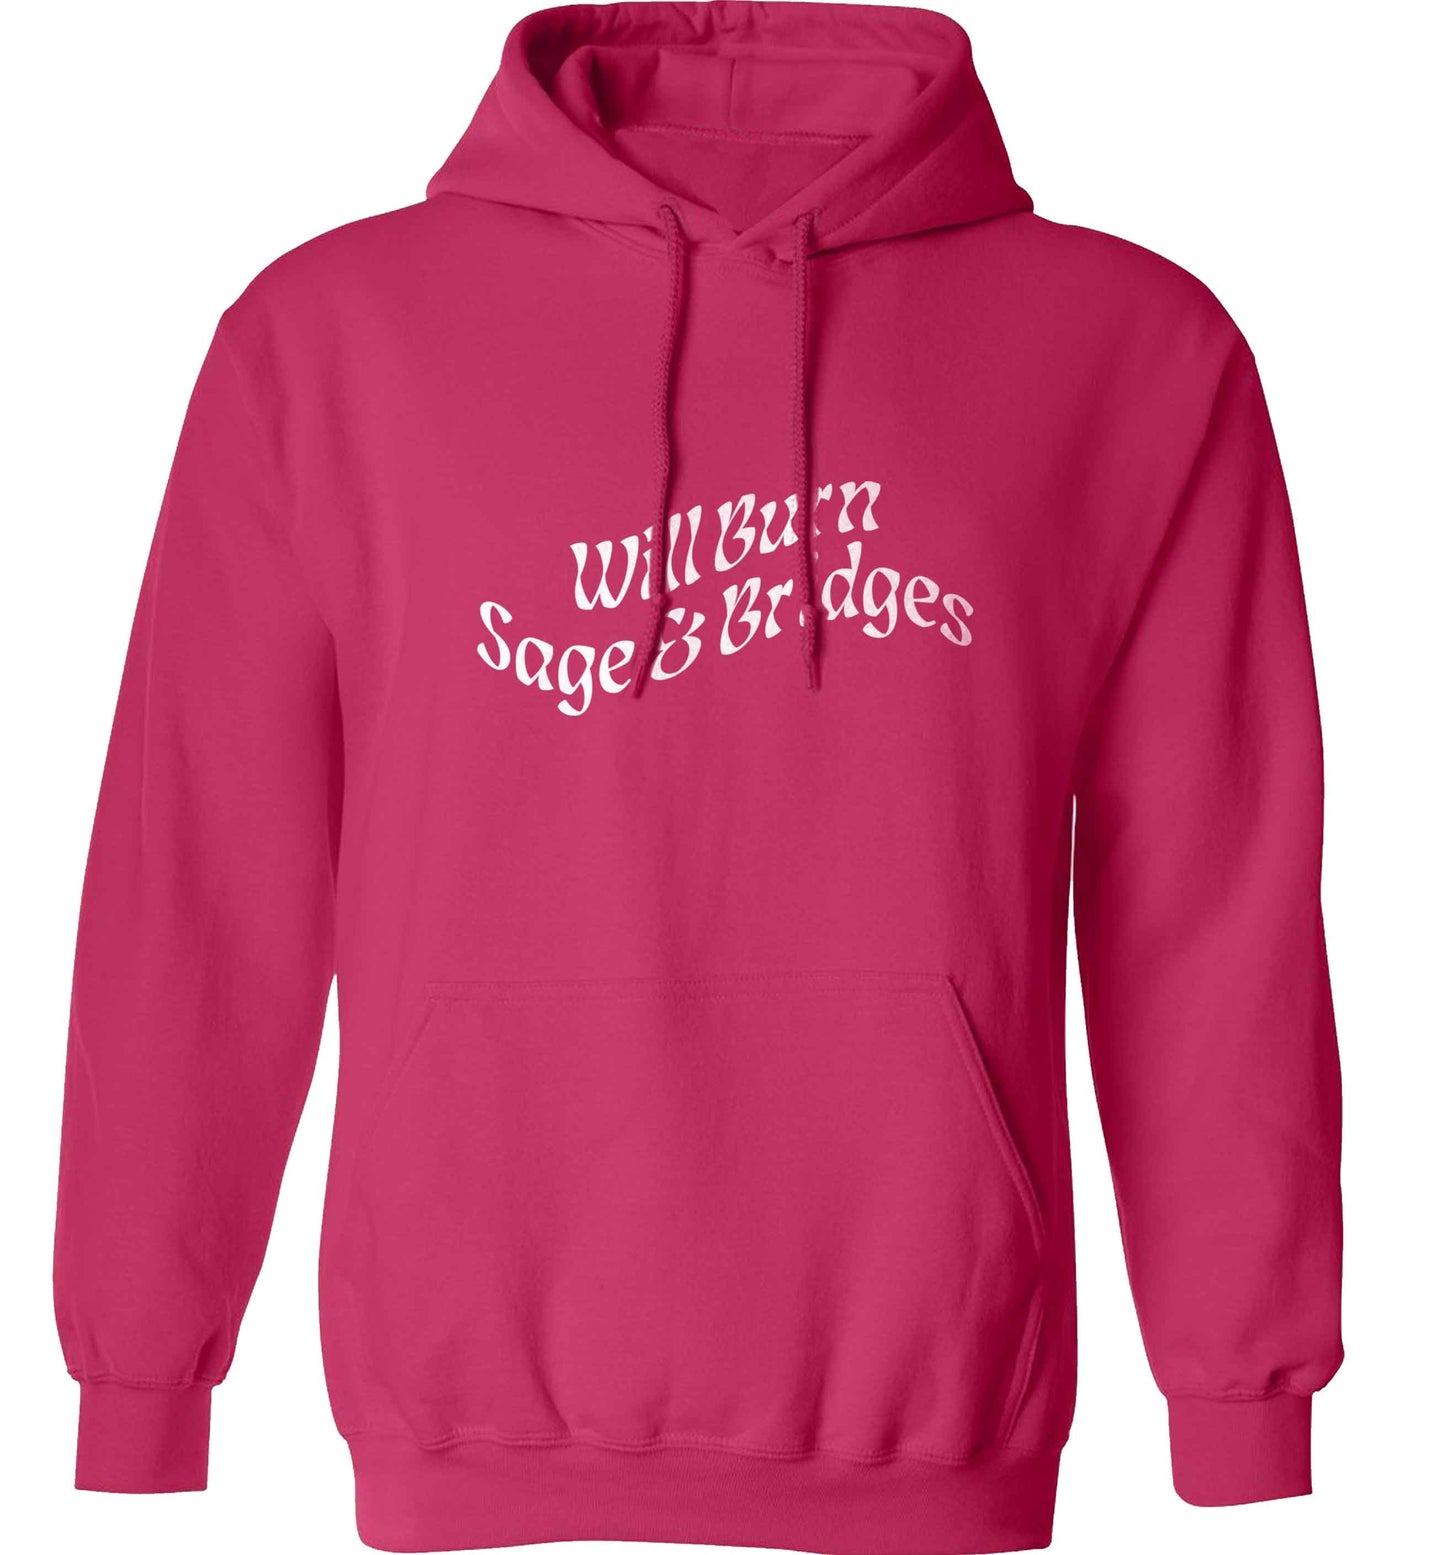 Will burn bridges and sage adults unisex pink hoodie 2XL